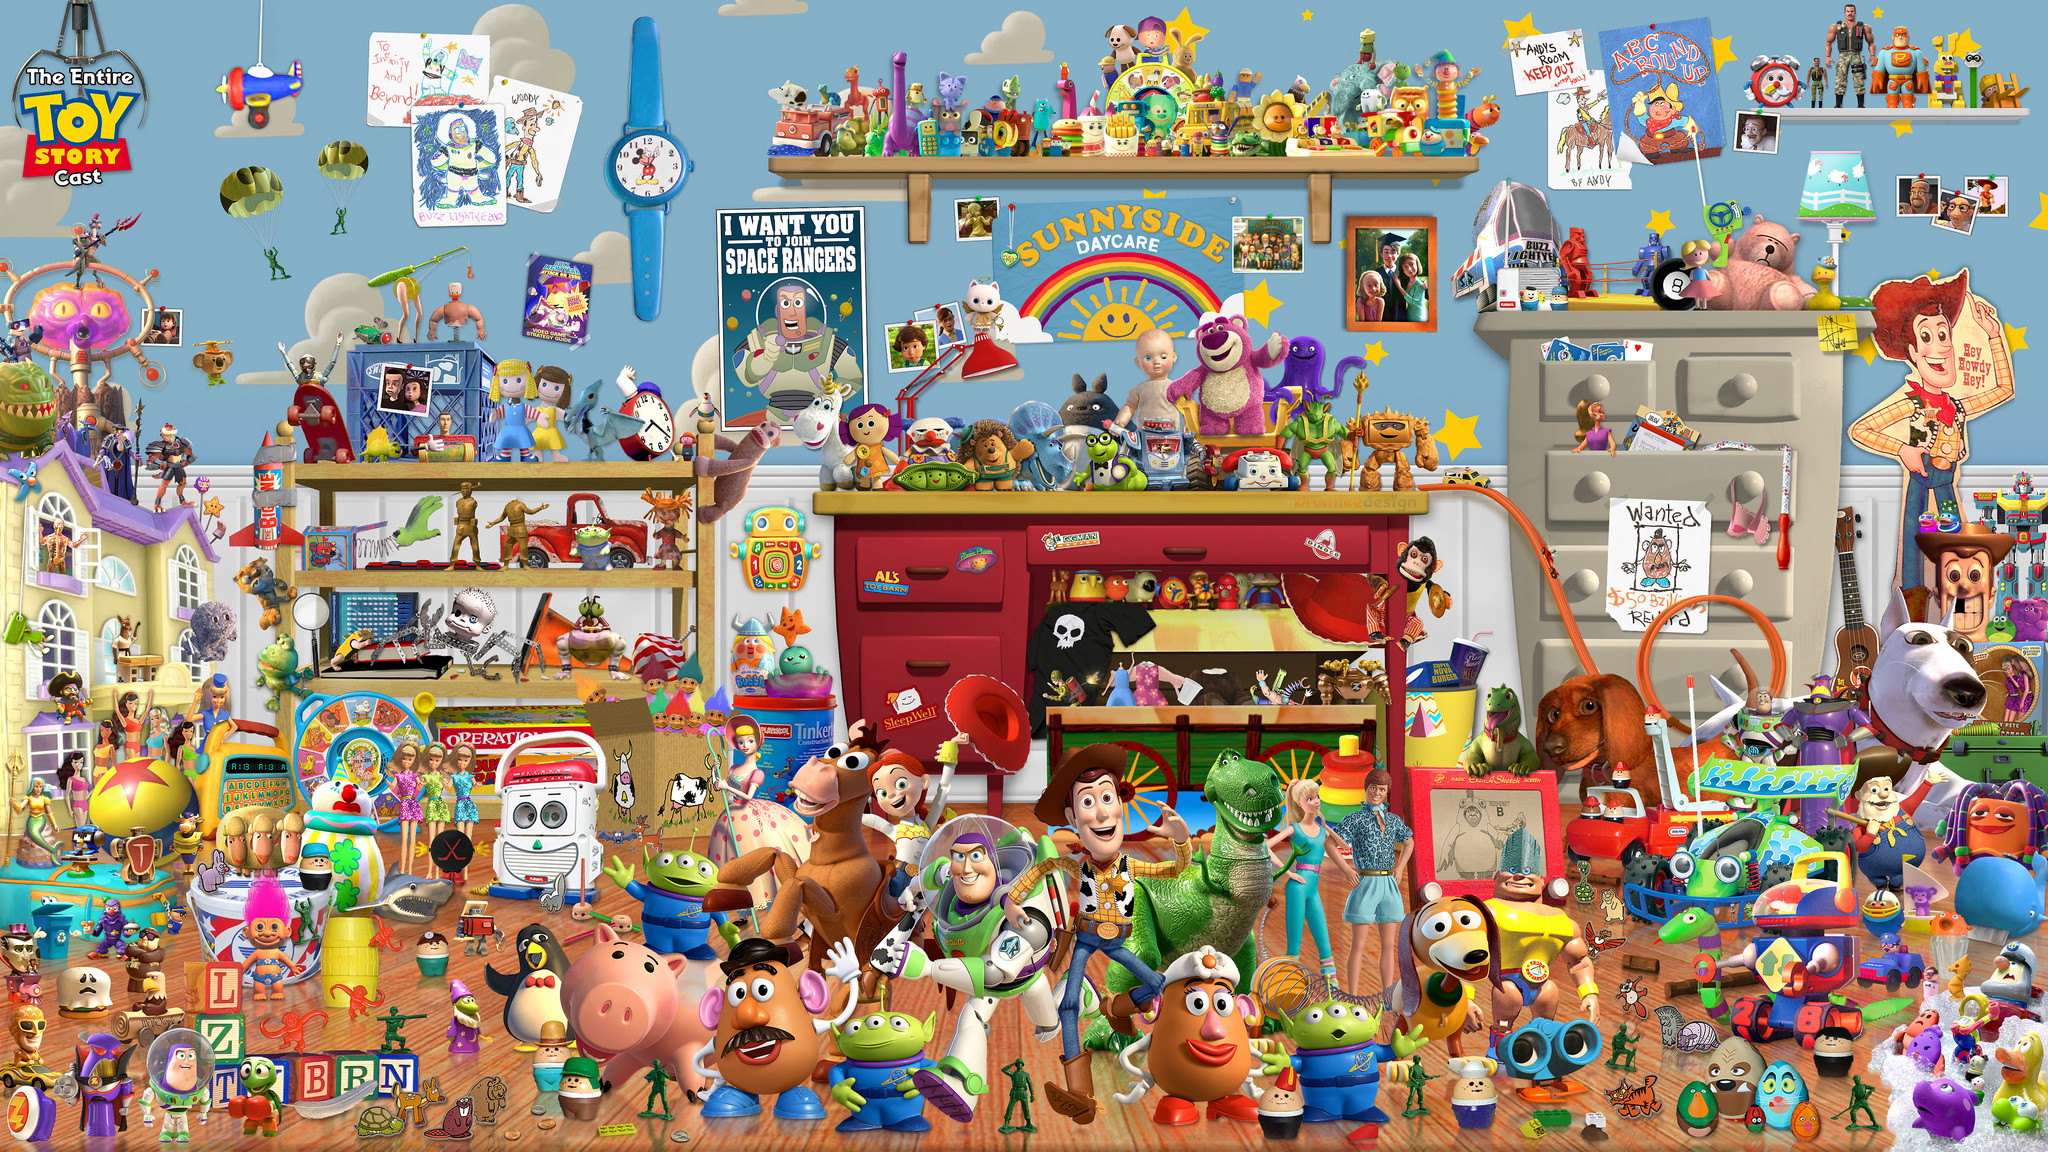 Toy Story Wallpaper for Desktop (55+ images)